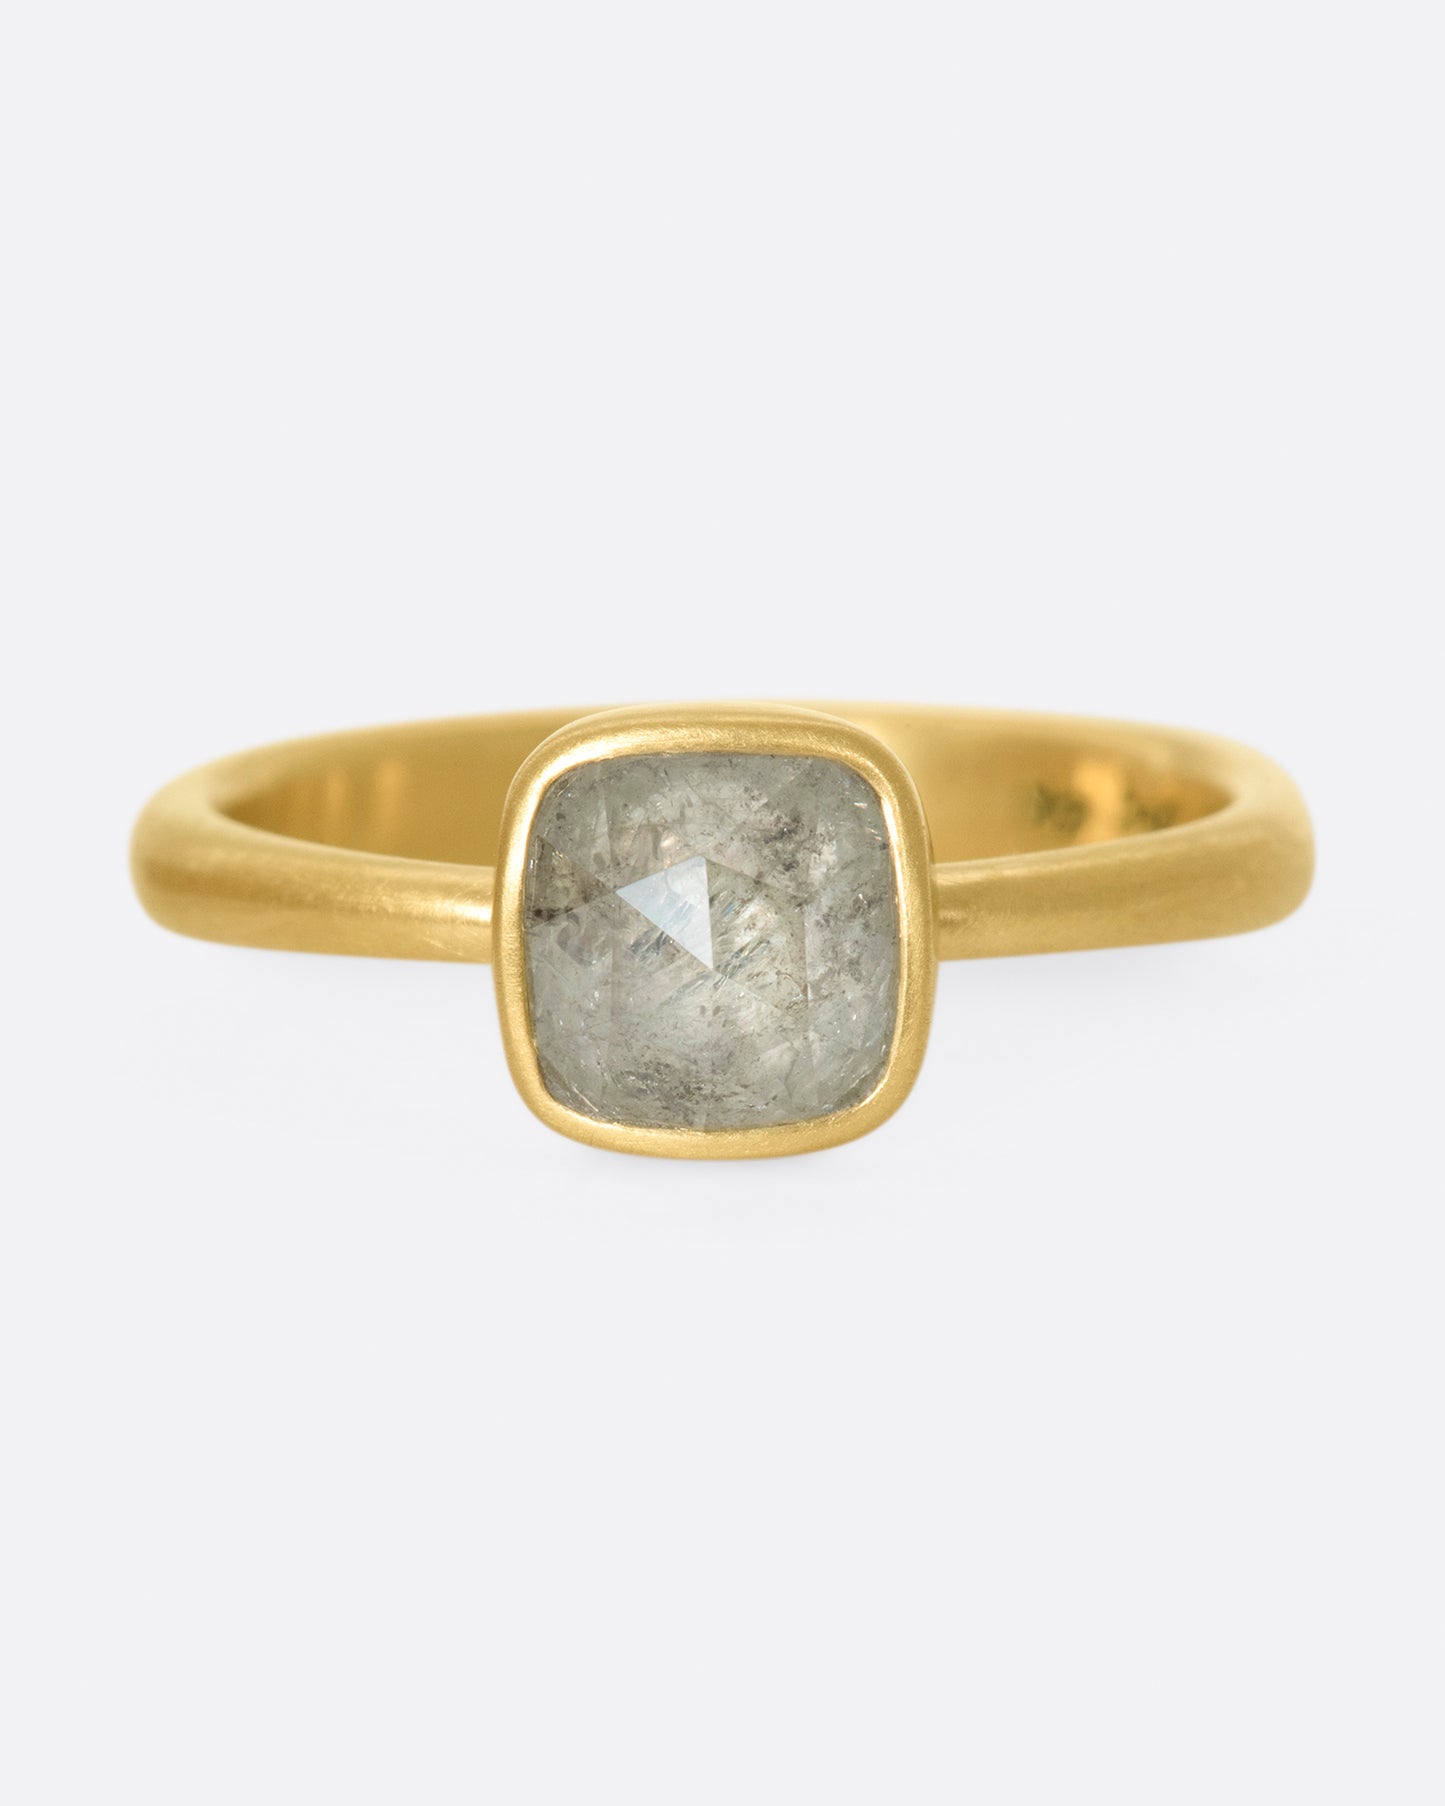 A faceted, cushion-shape diamond set in Lola Brooks' signature bezel setting